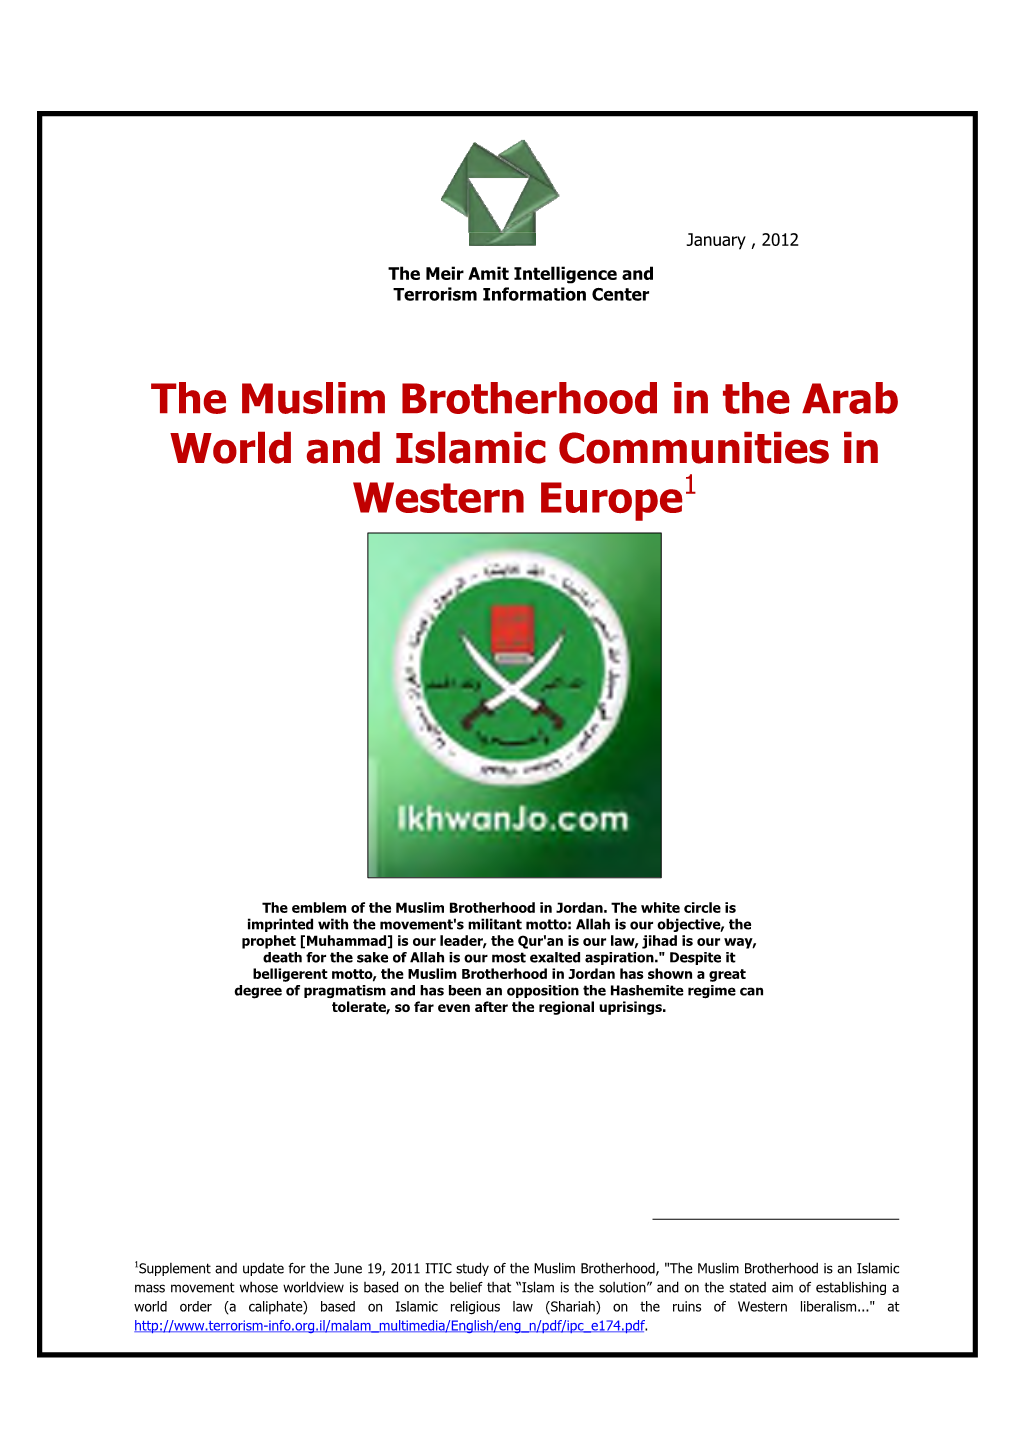 The Muslim Brotherhood in the Arab World and Islamic Communities in Western Europe1